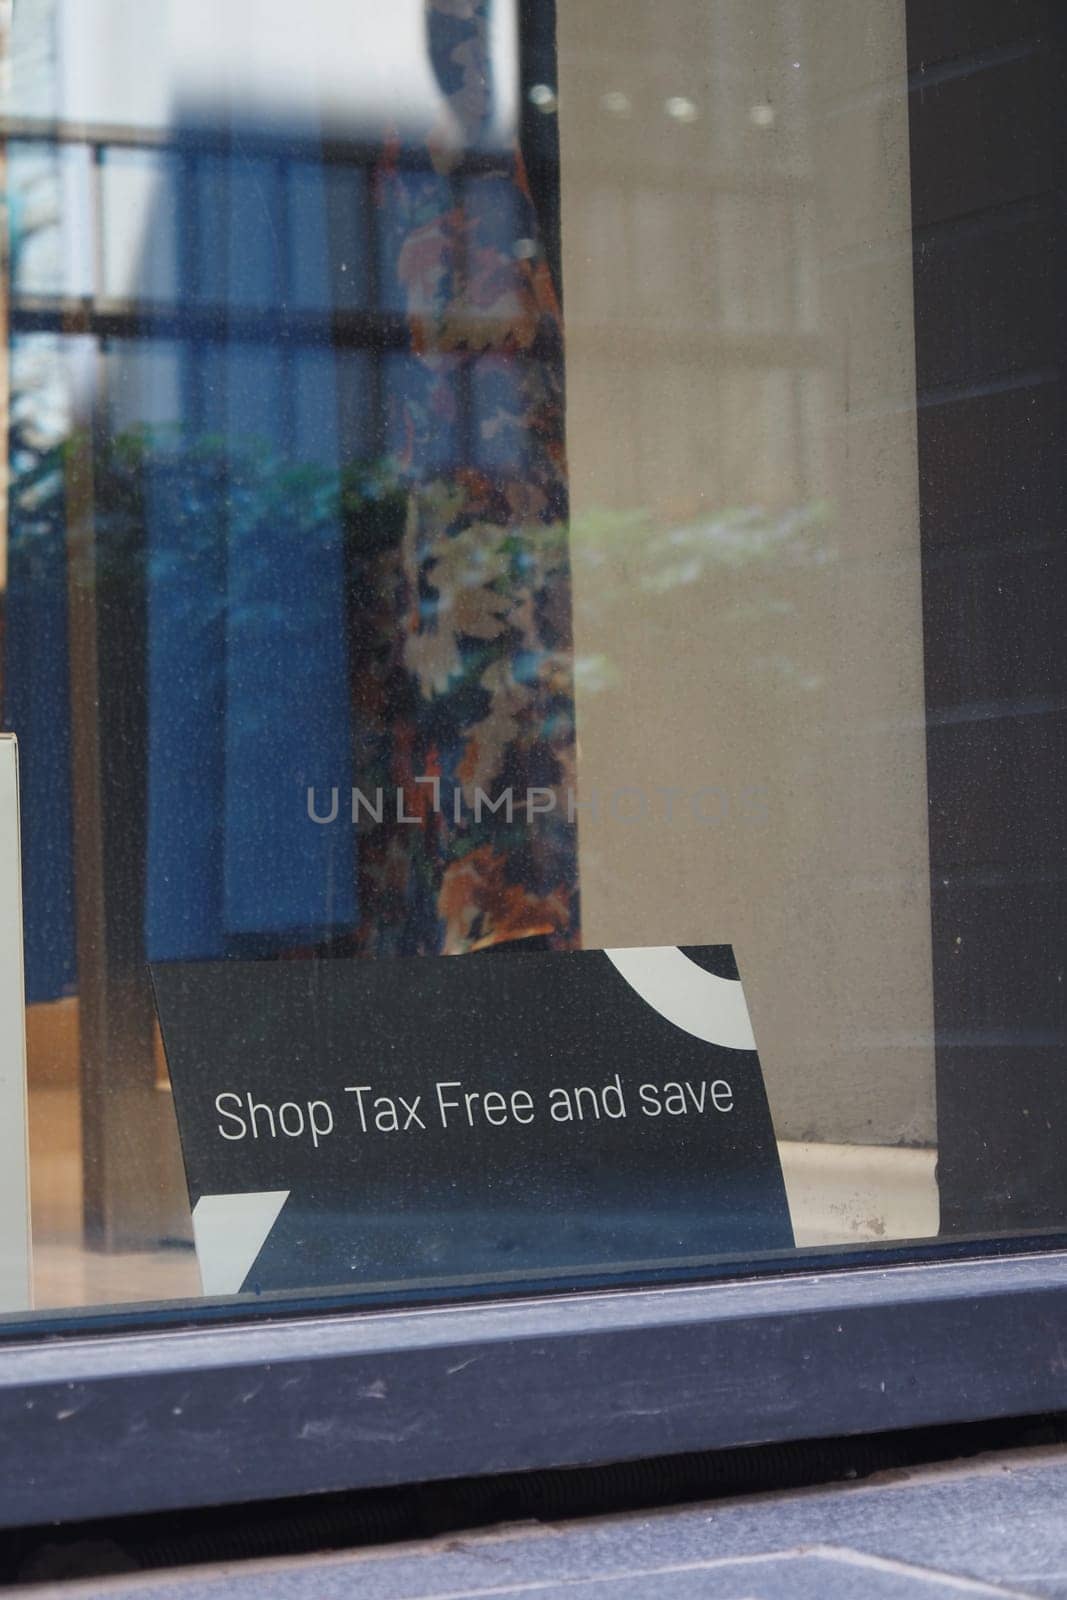 shop tax free text duty free shop sign on shop window ,